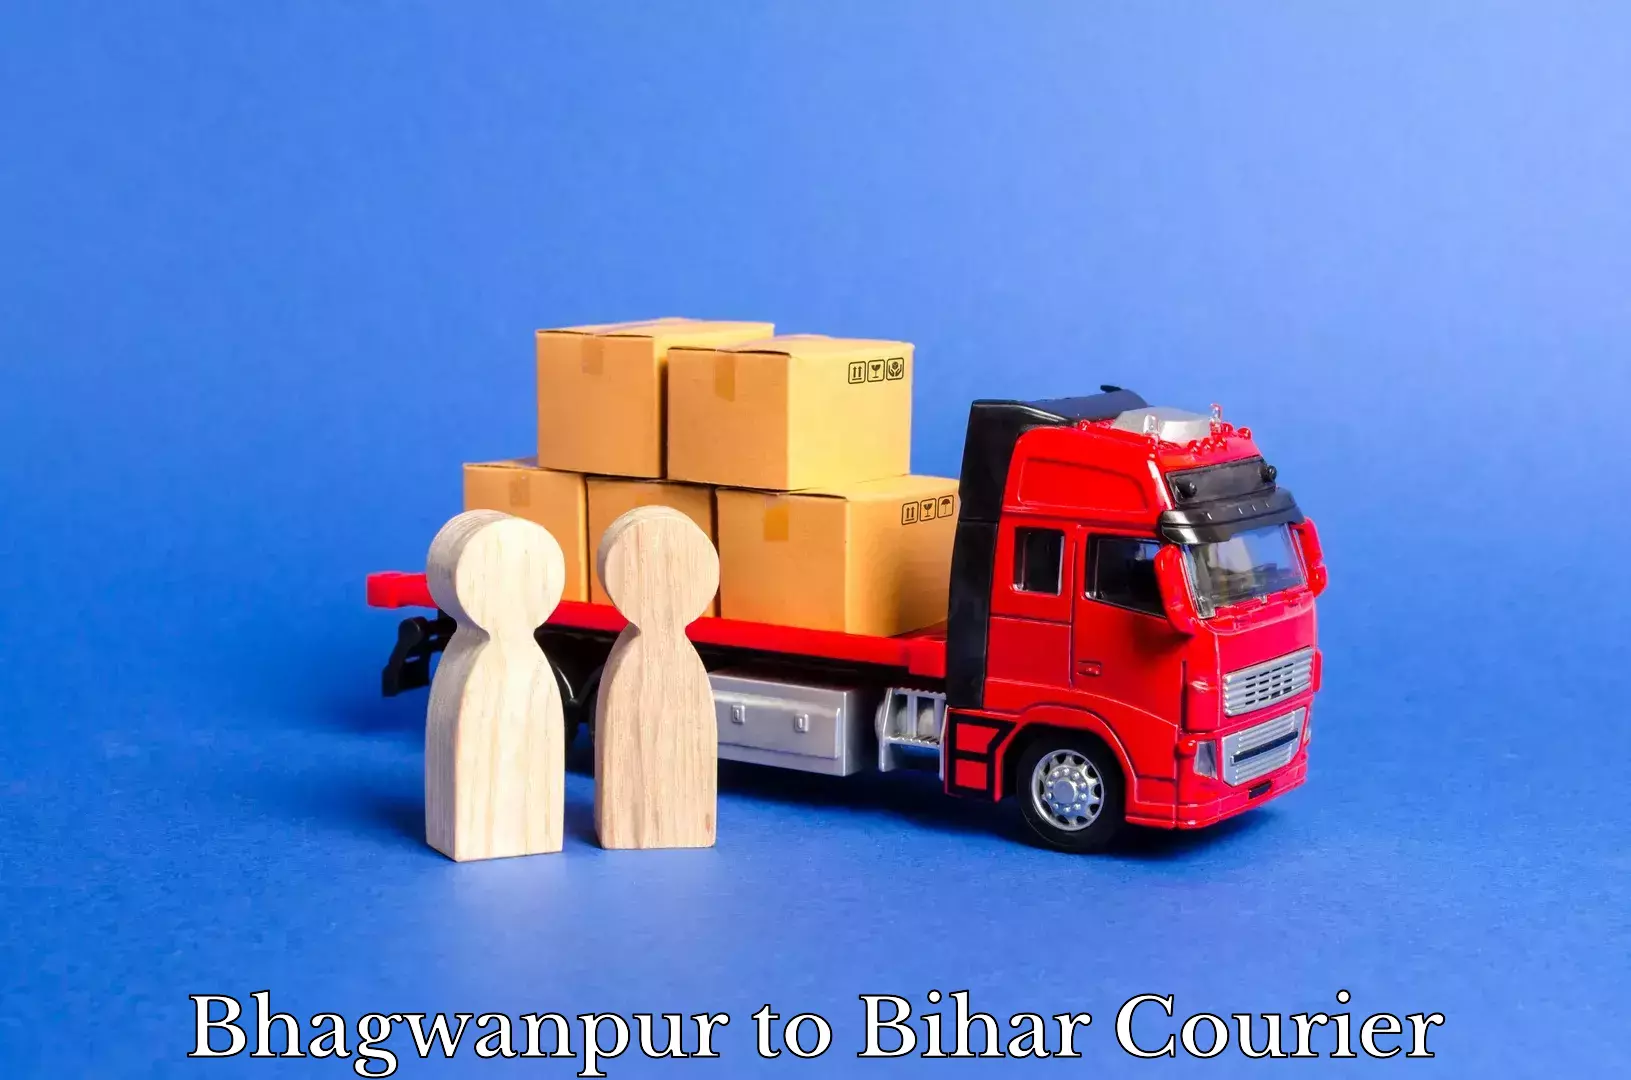 Speedy delivery service Bhagwanpur to Bihar